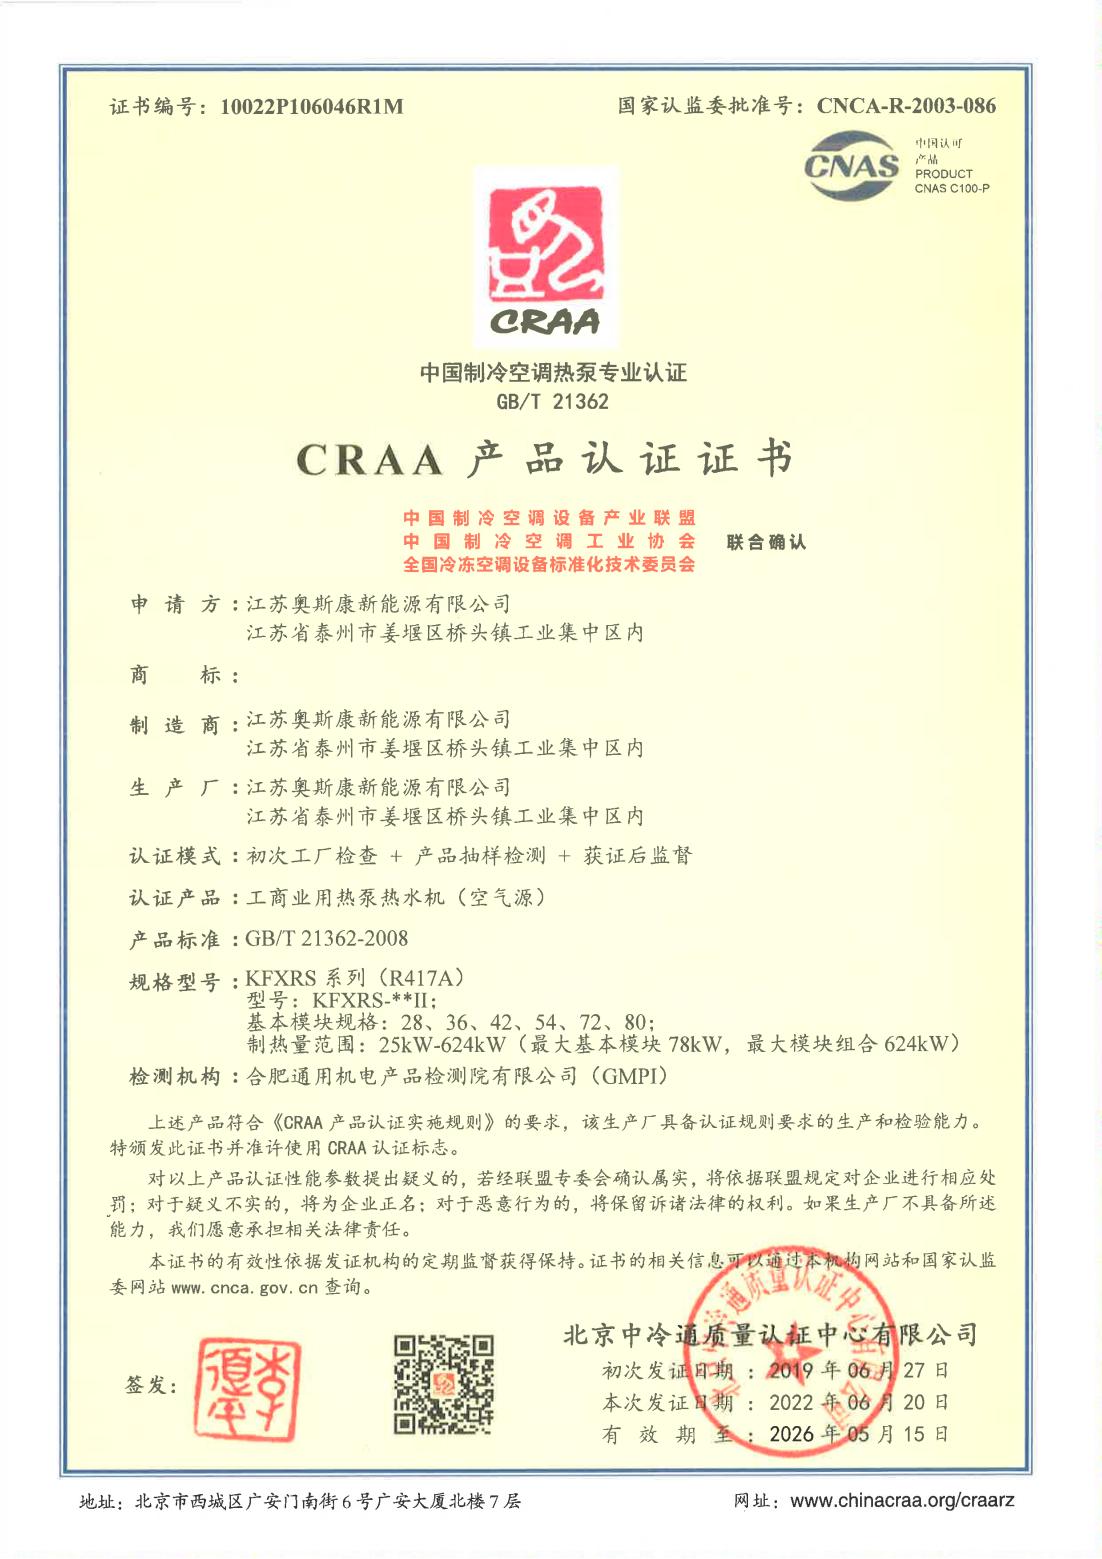 CRAA Product Certification